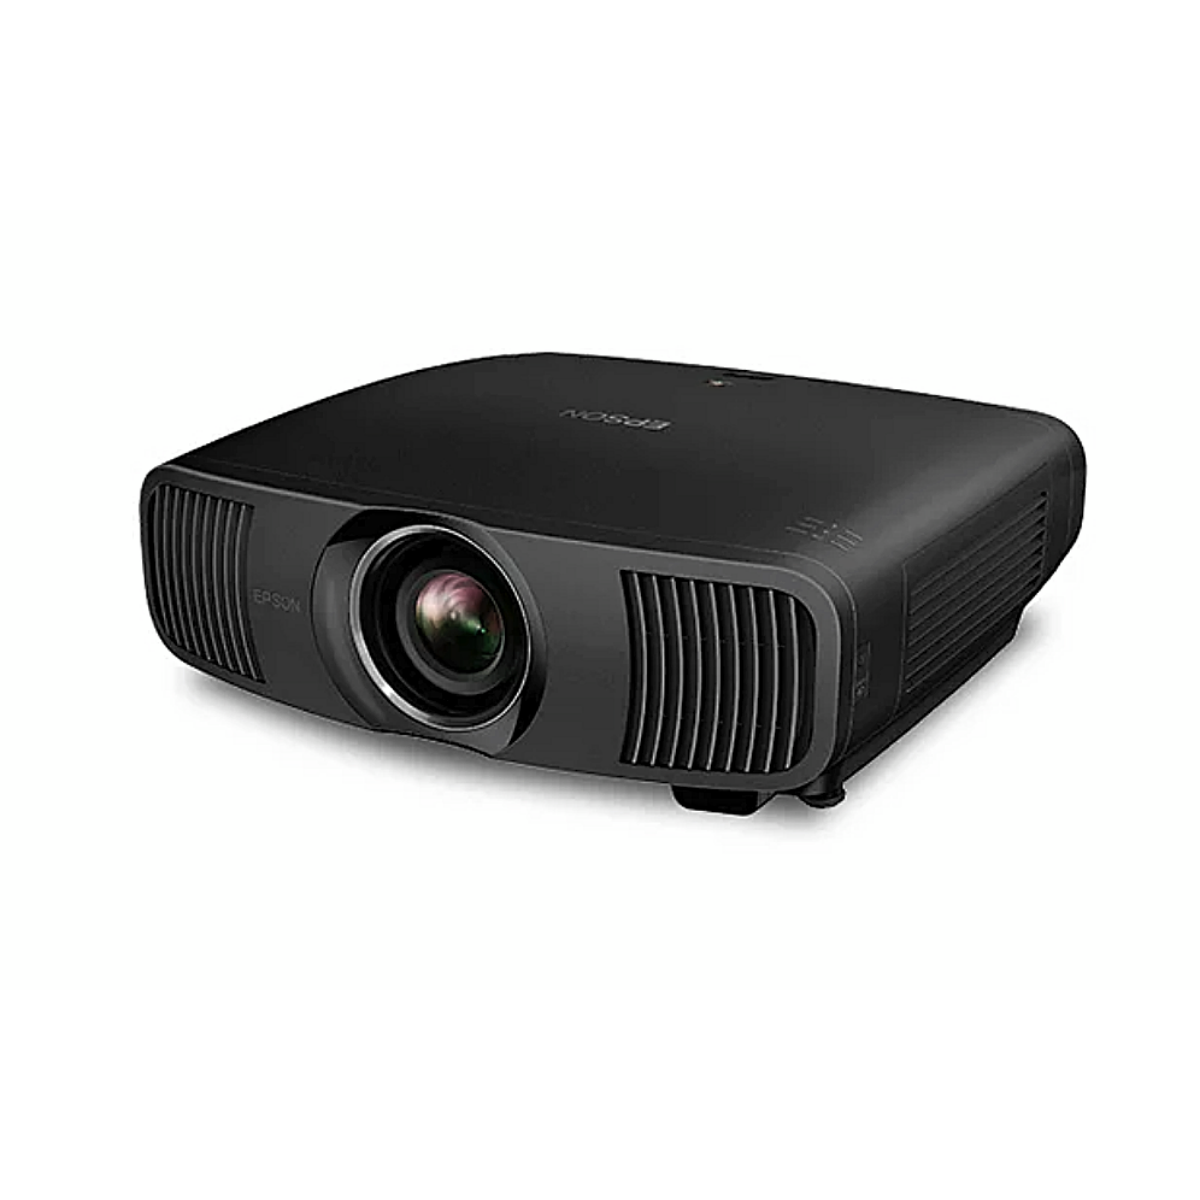 An Epson Pro Cinema LS12000 projector